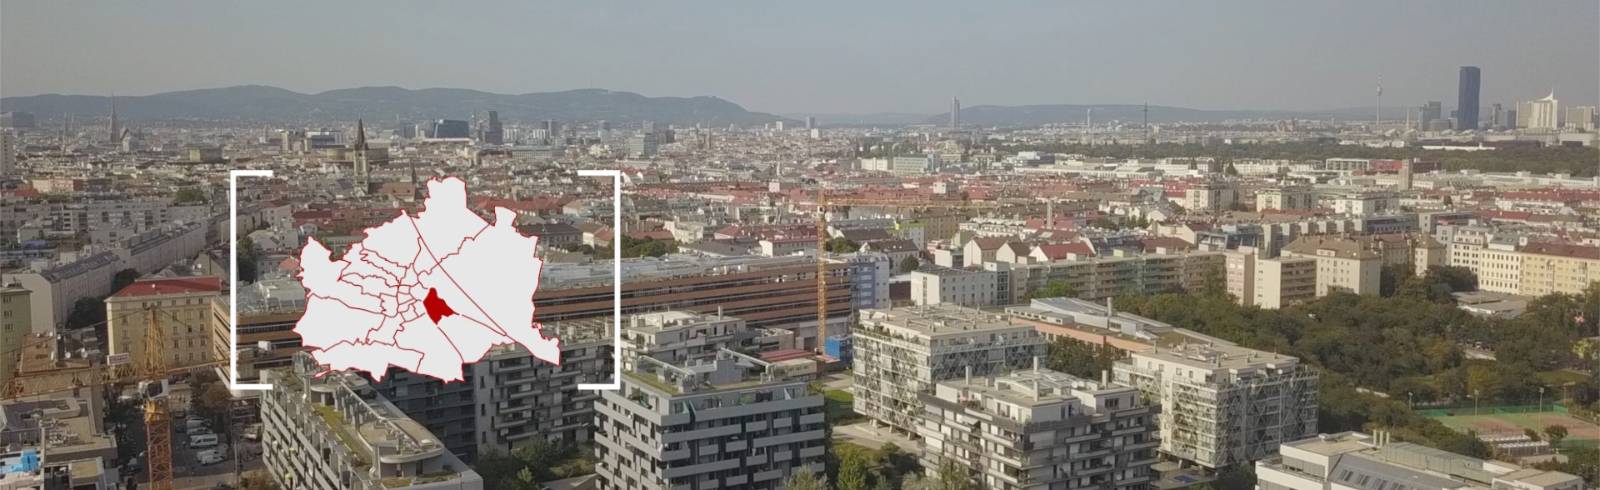 Wien in Zahlen: Die Landstraße